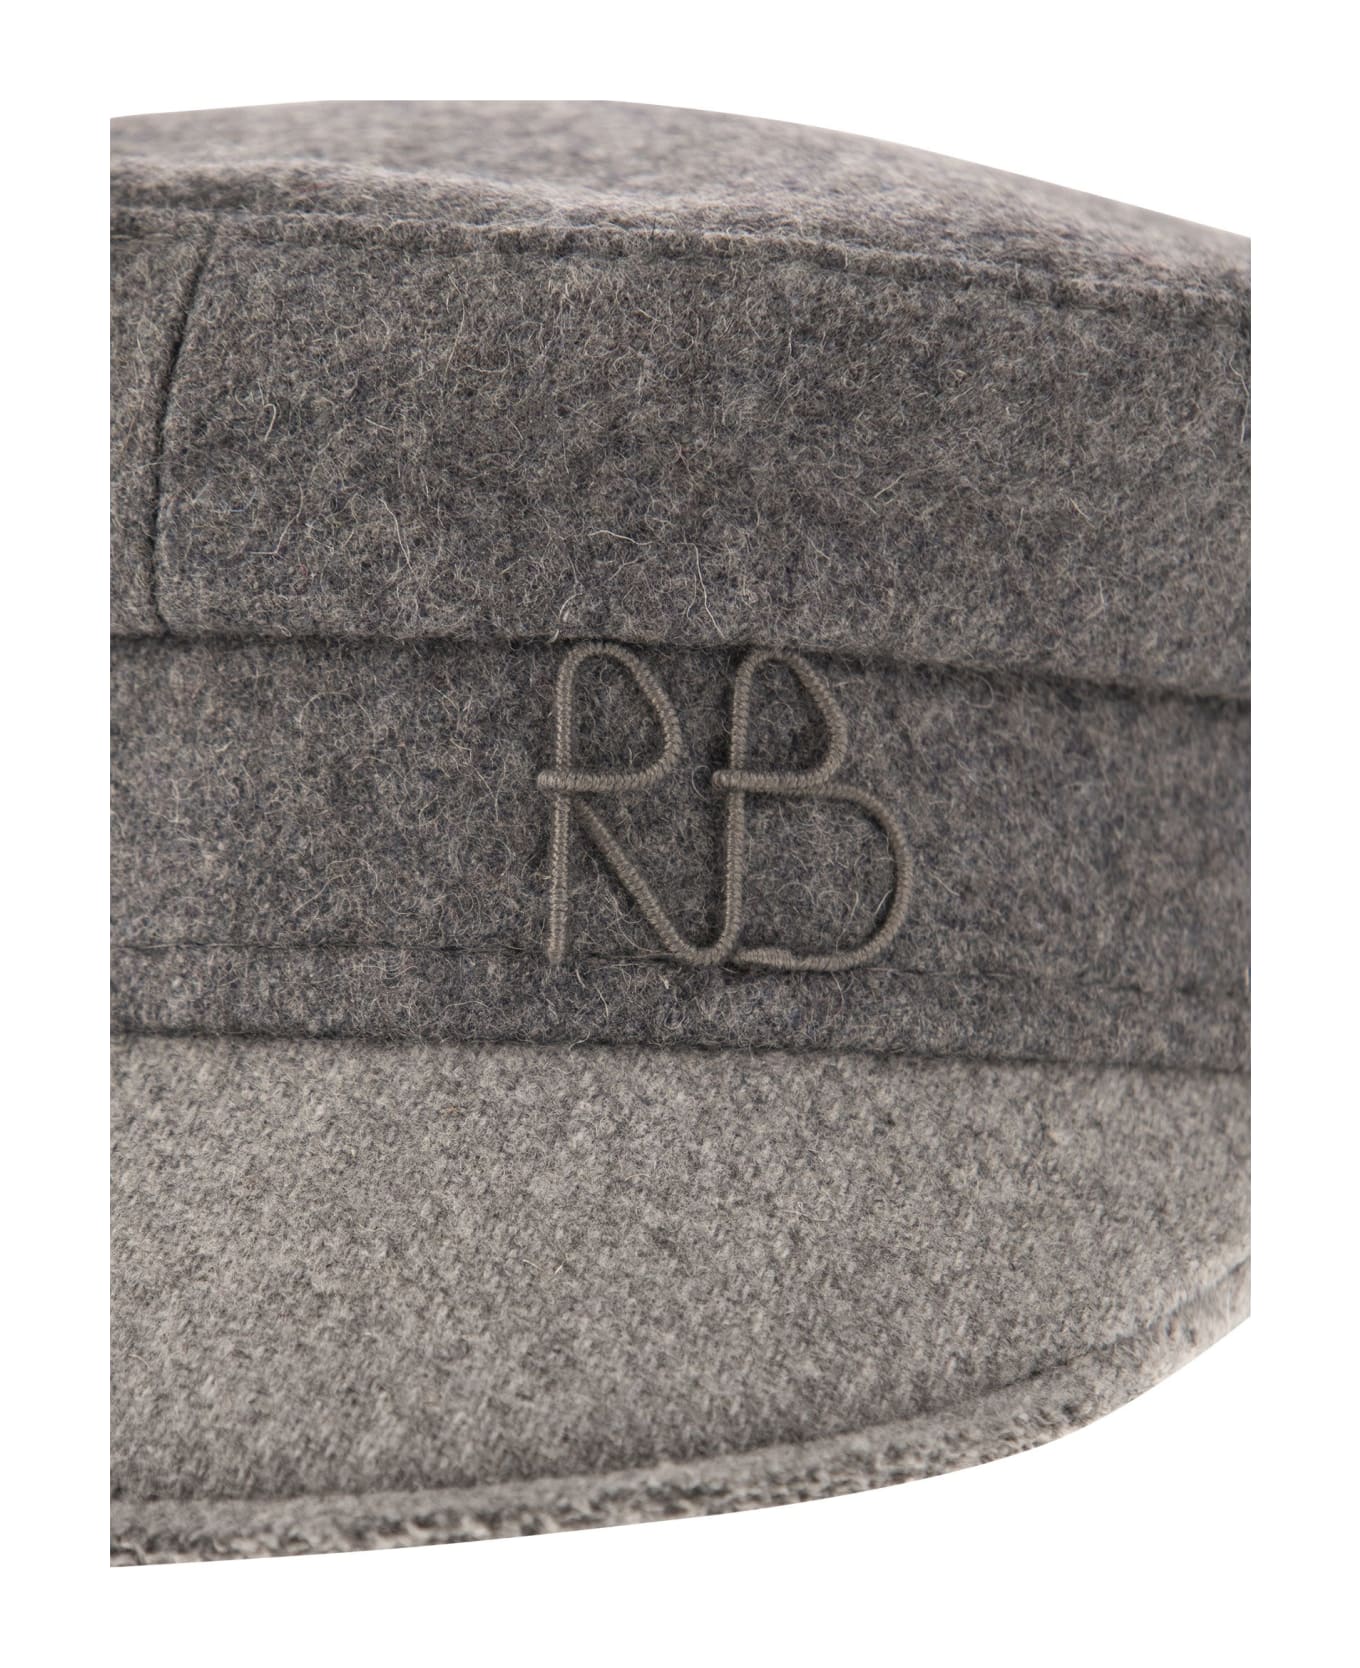 Ruslan Baginskiy Baker Boy - Wool-blend Hat - Grey 帽子